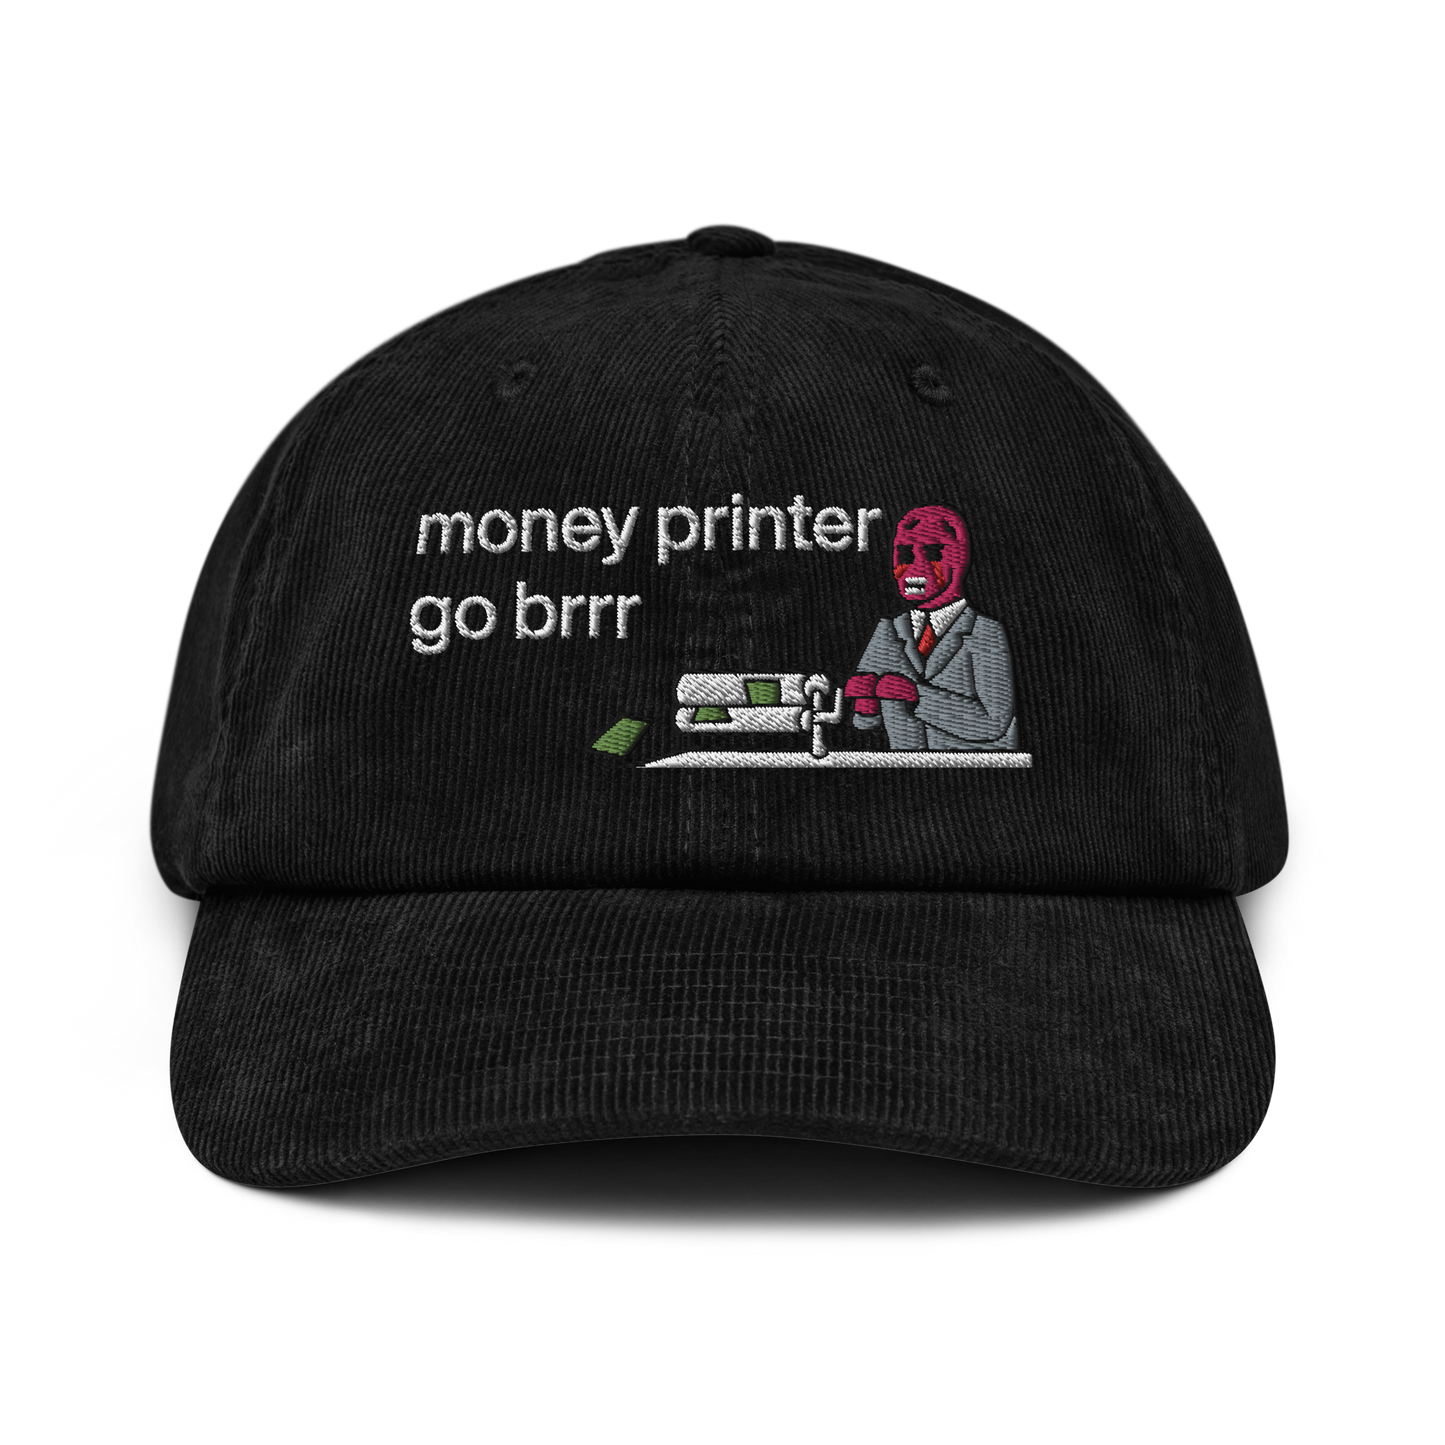 money printer hat